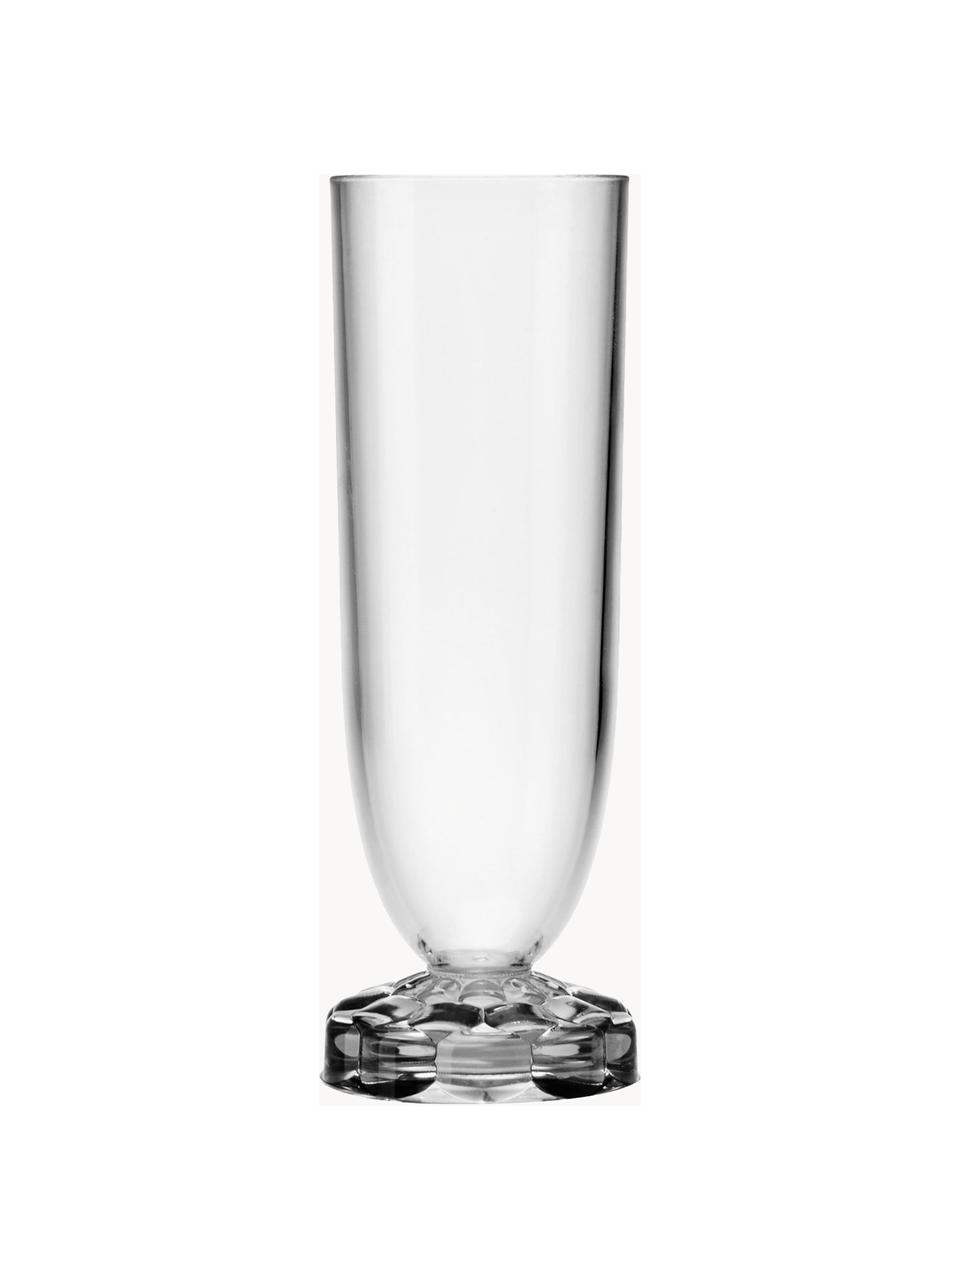 Champagnergläser Jellies mit Strukturmuster, 4 Stück, Kunststoff, Transparent, Ø 6 x H 17 cm,  200 ml